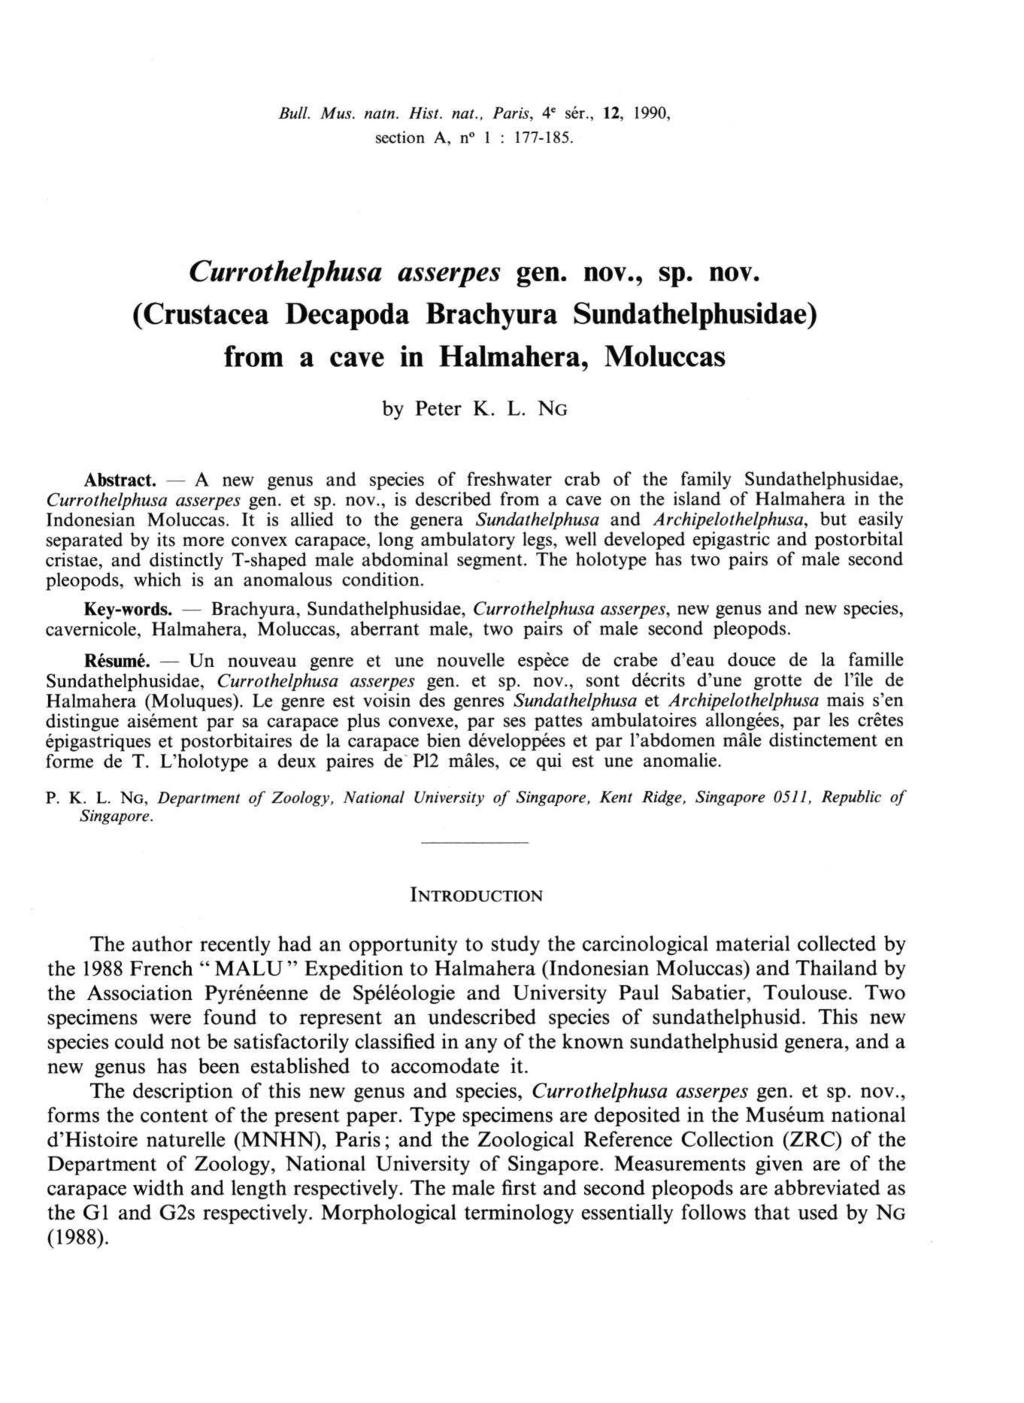 Bull. Mus. natn. Hist, nat., Paris, 4' sér., 12, 1990, section A, n" 1 : 177-185. Currothelphusa asserpes gen. nov.